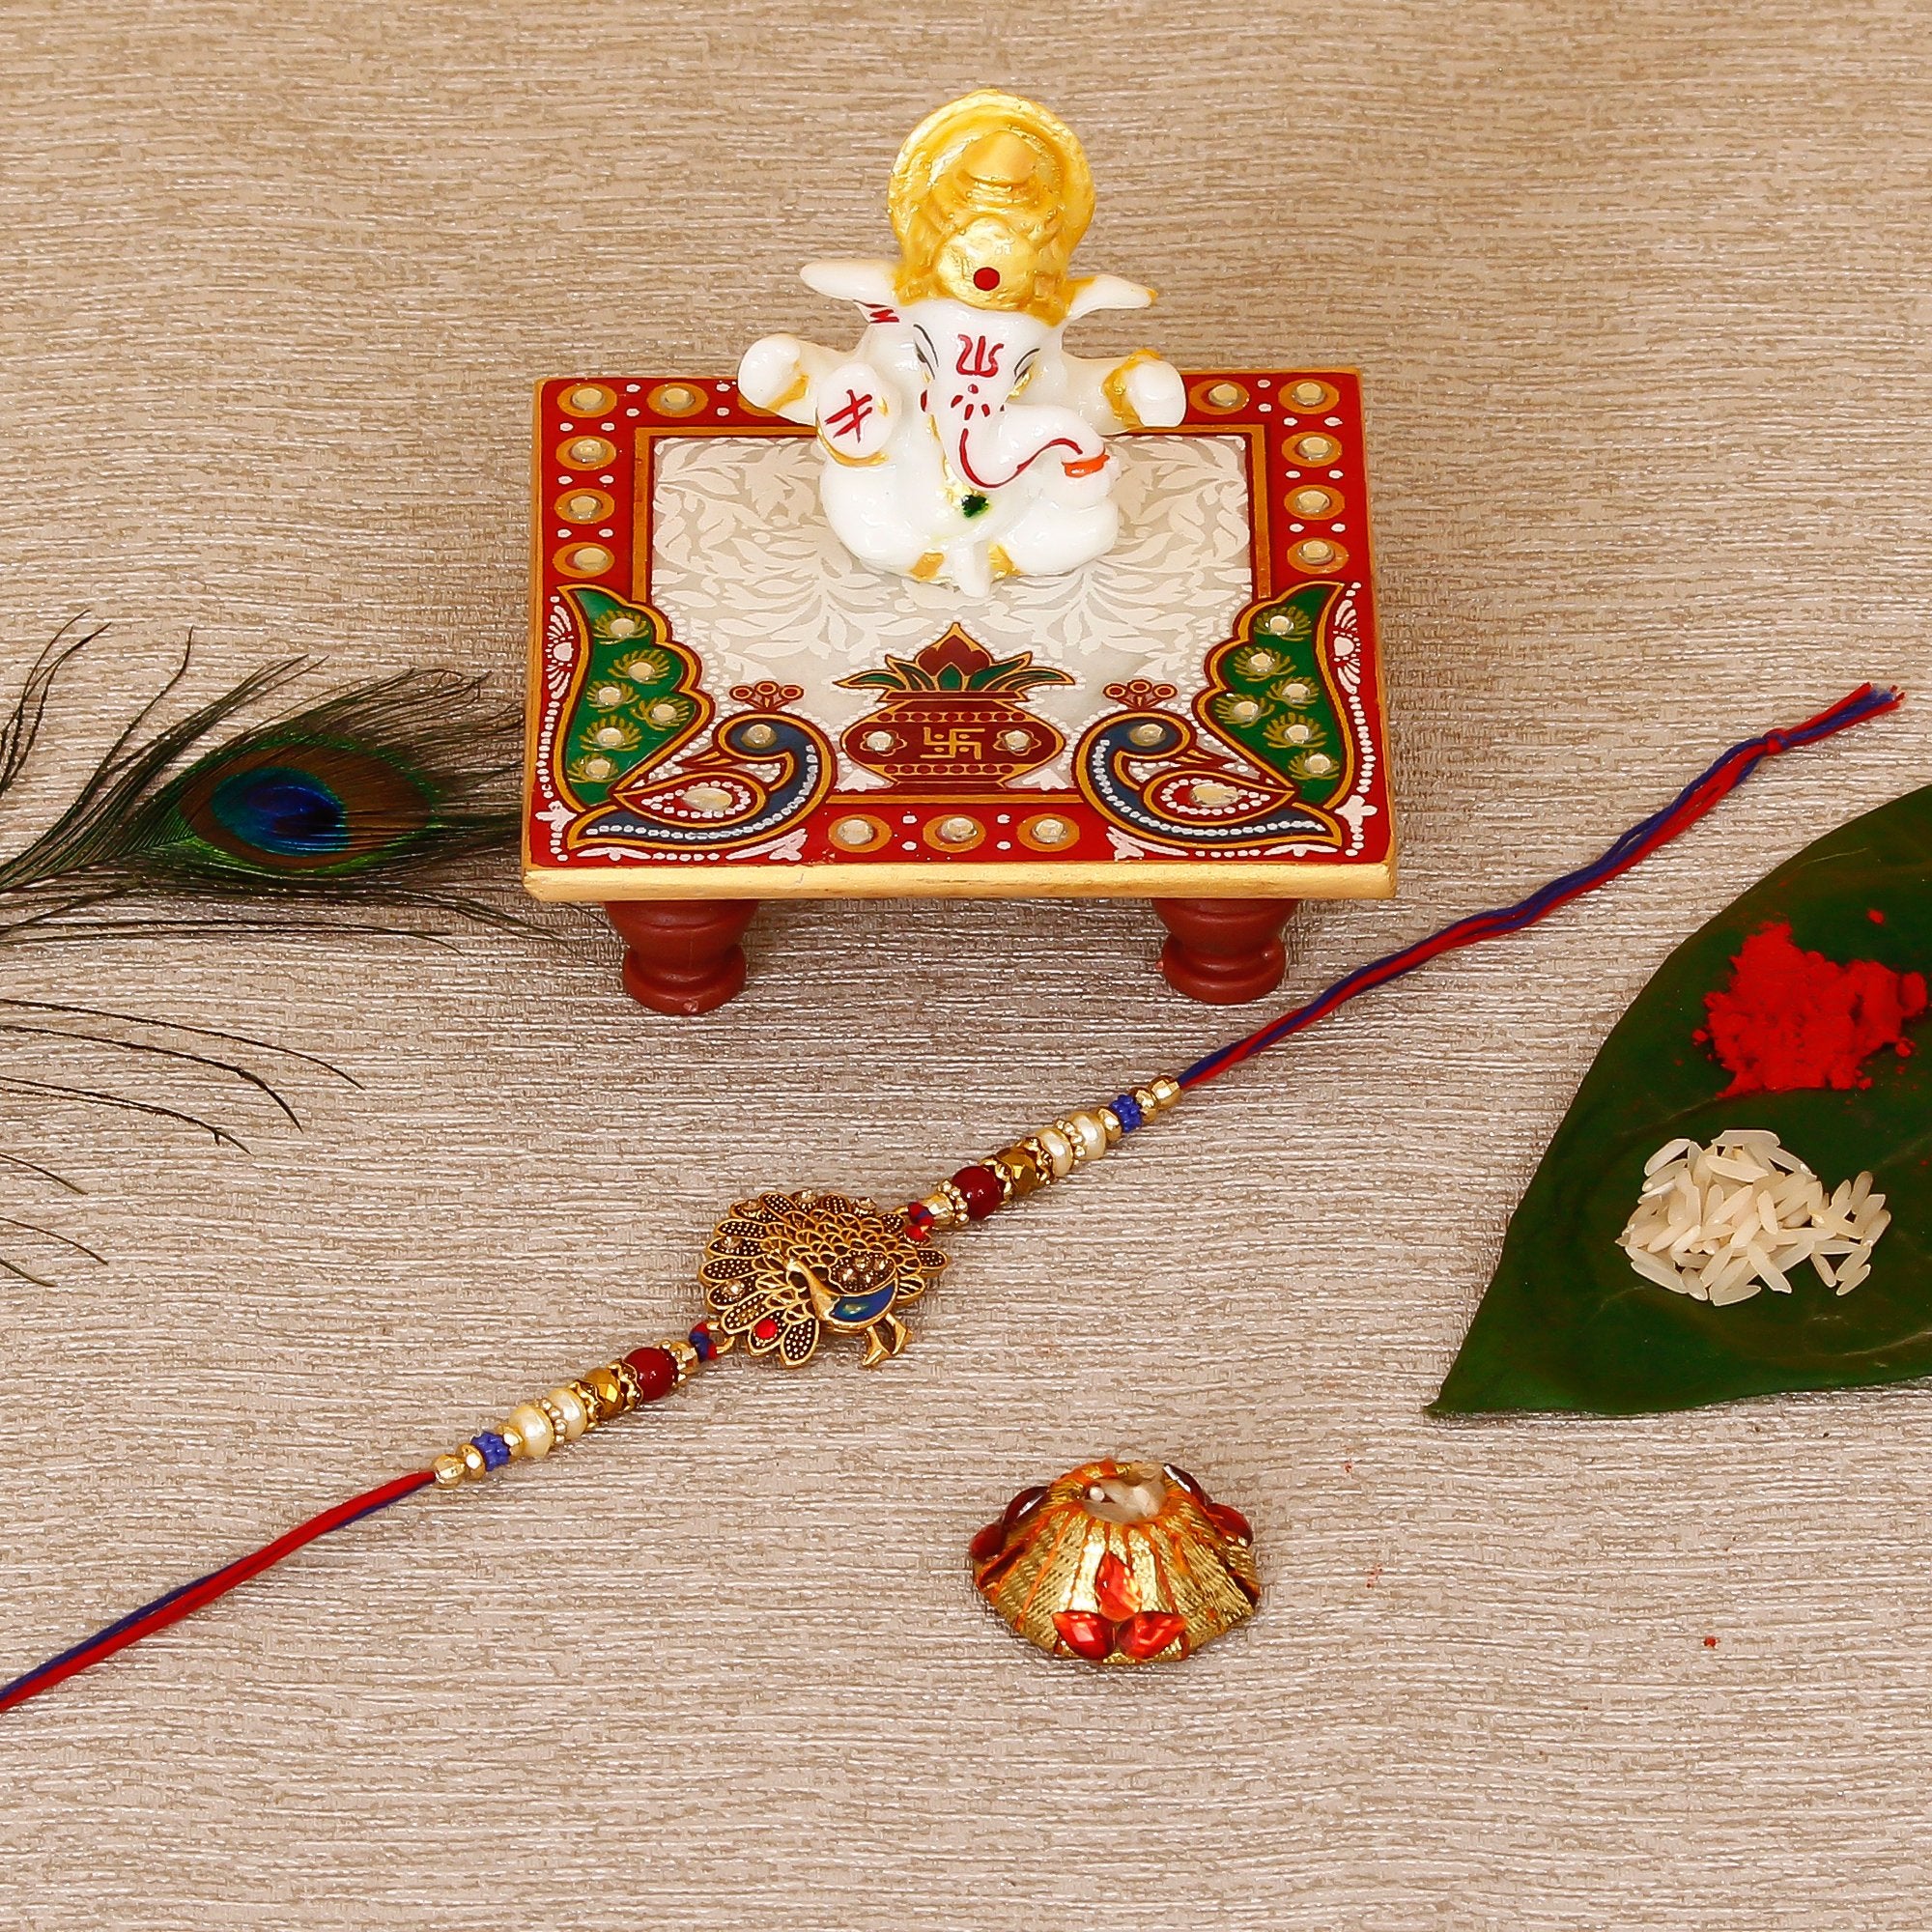 Designer Dancing Peacock Rakhi with Lord Ganesha Marble Chowki and Roli Tikka Matki